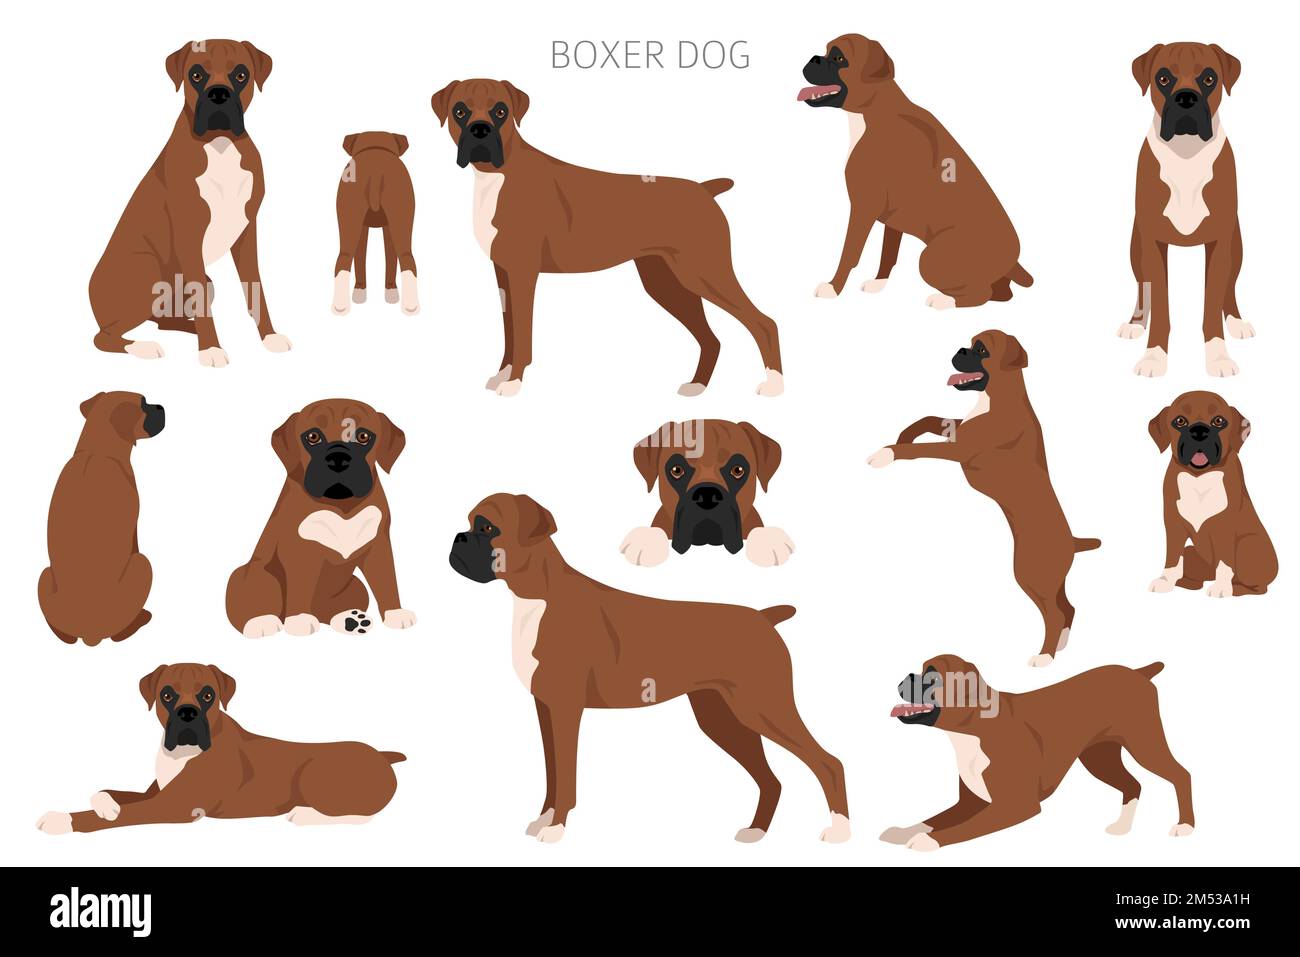 Boxer-Dog-Clipart. Alle Mantelfarben eingestellt. Andere Position. Infografik zu den Merkmalen aller Hunderassen. Vektordarstellung Stock Vektor